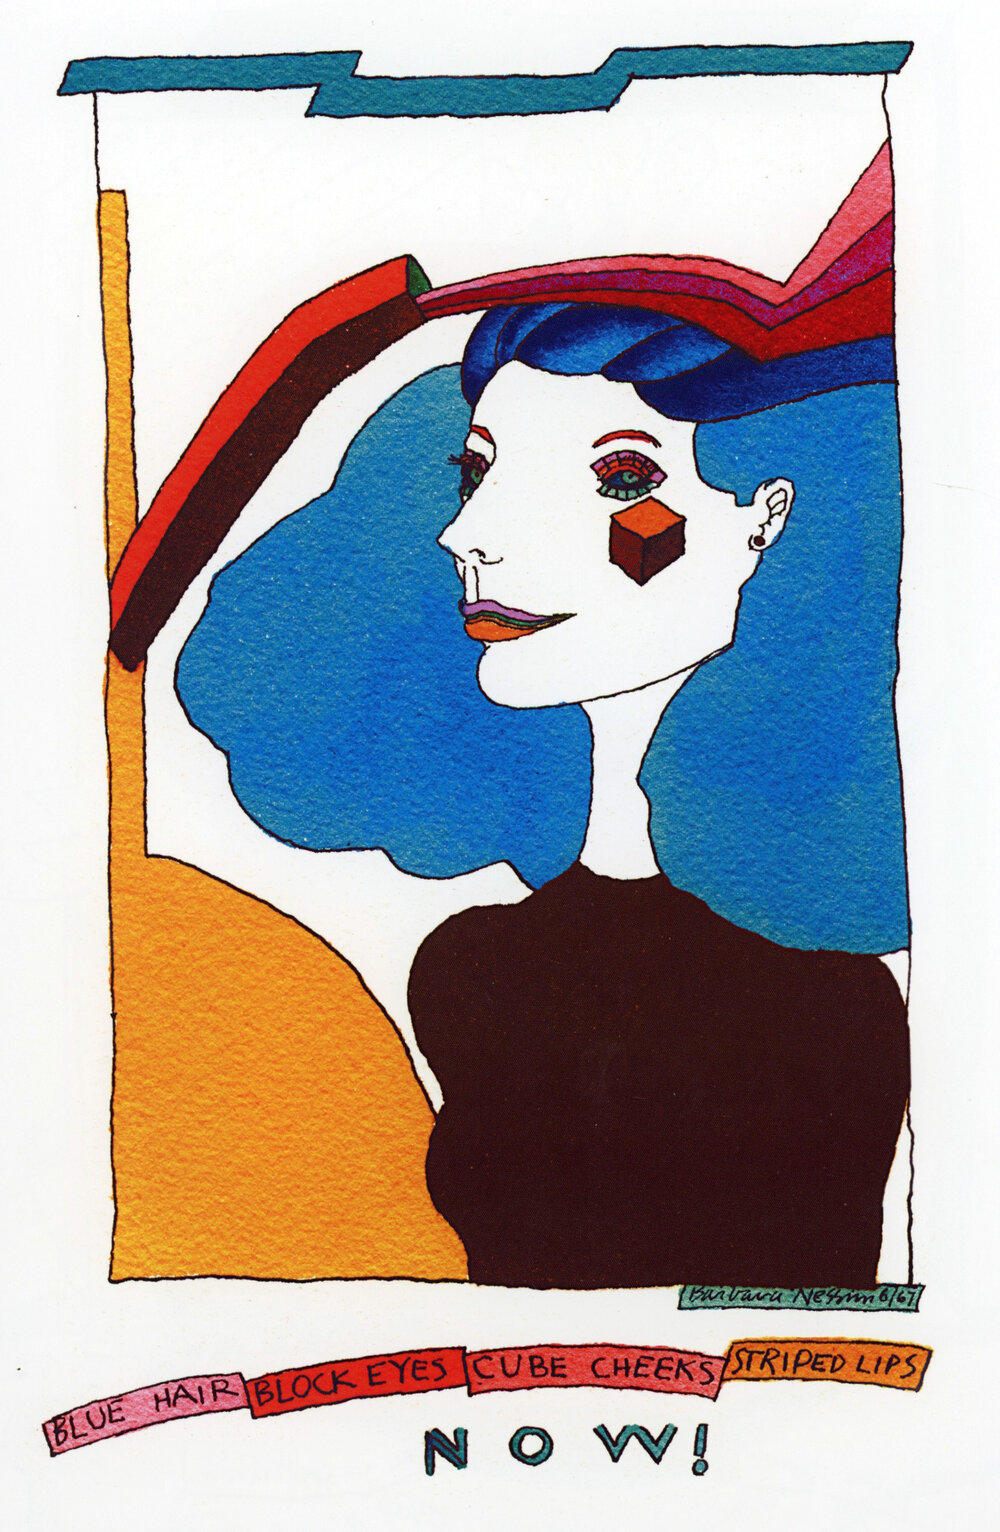 Blue Hair, Block Eyes, Cube Cheeks, Striped Lips Now!, 1967